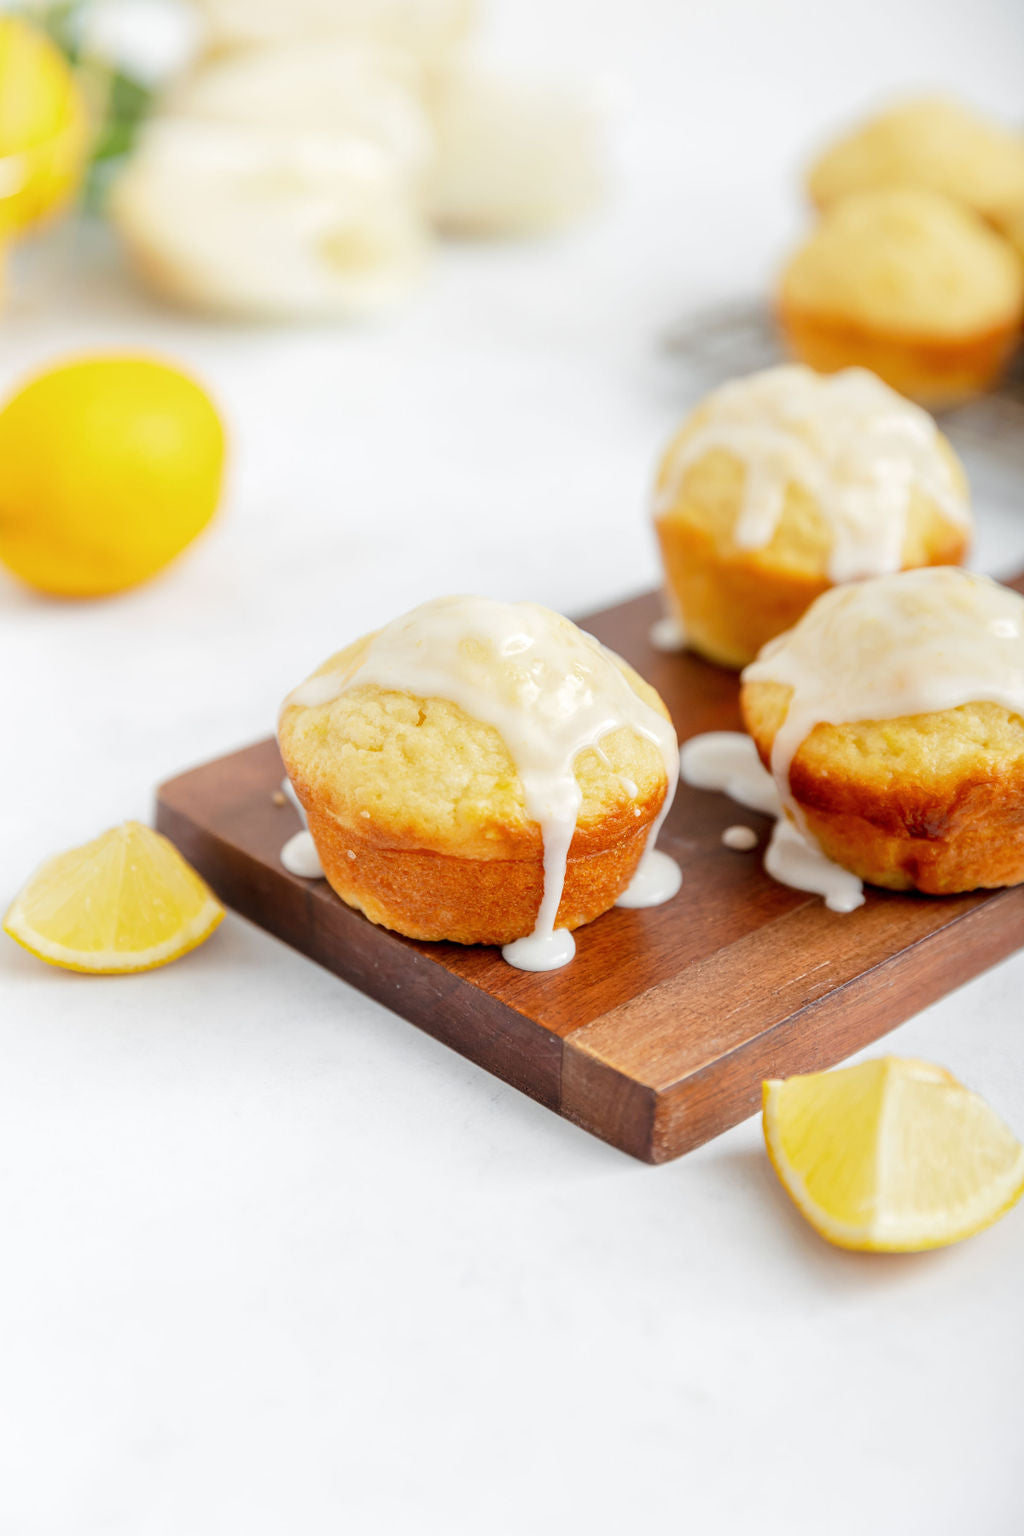 Making the Best Lemon Muffins